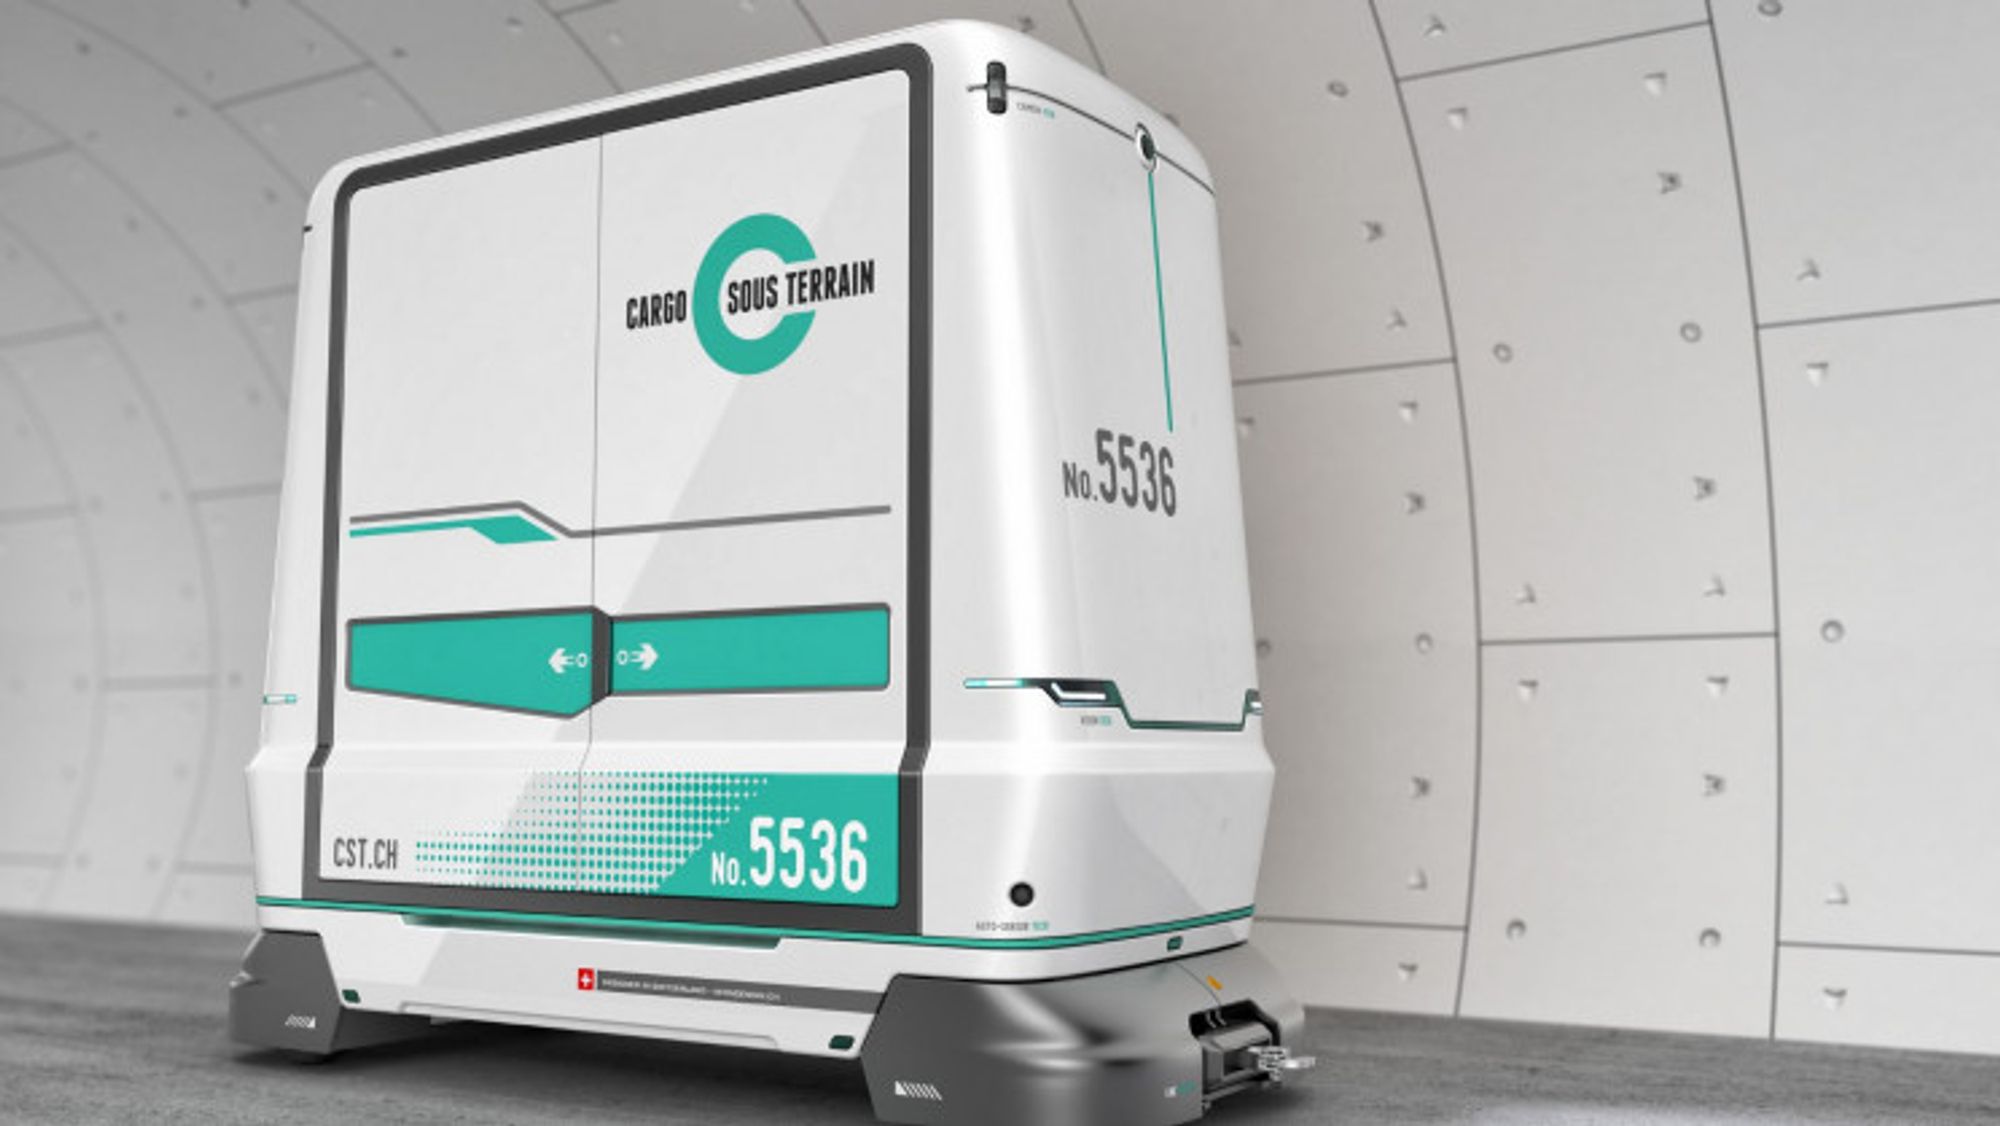 Switzerland will build an autonomous, underground freight transport system